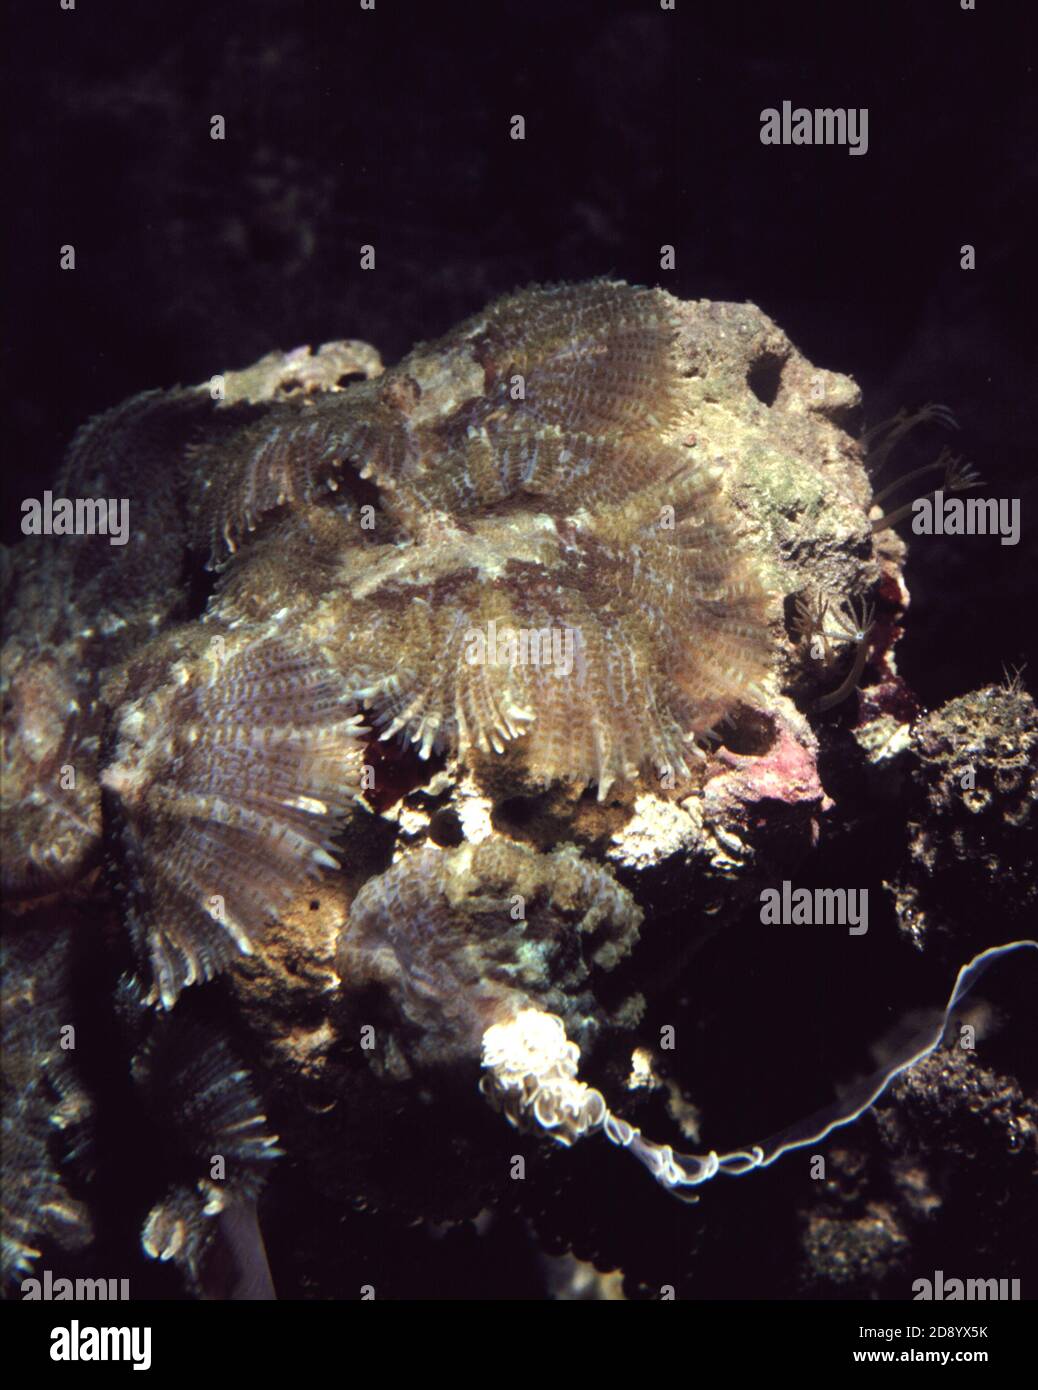 Reacción defensiva en el coral hongo Discosoma sp. (Corallimorpharia): Expulsión de filamentos mesentéricos tóxicos Foto de stock